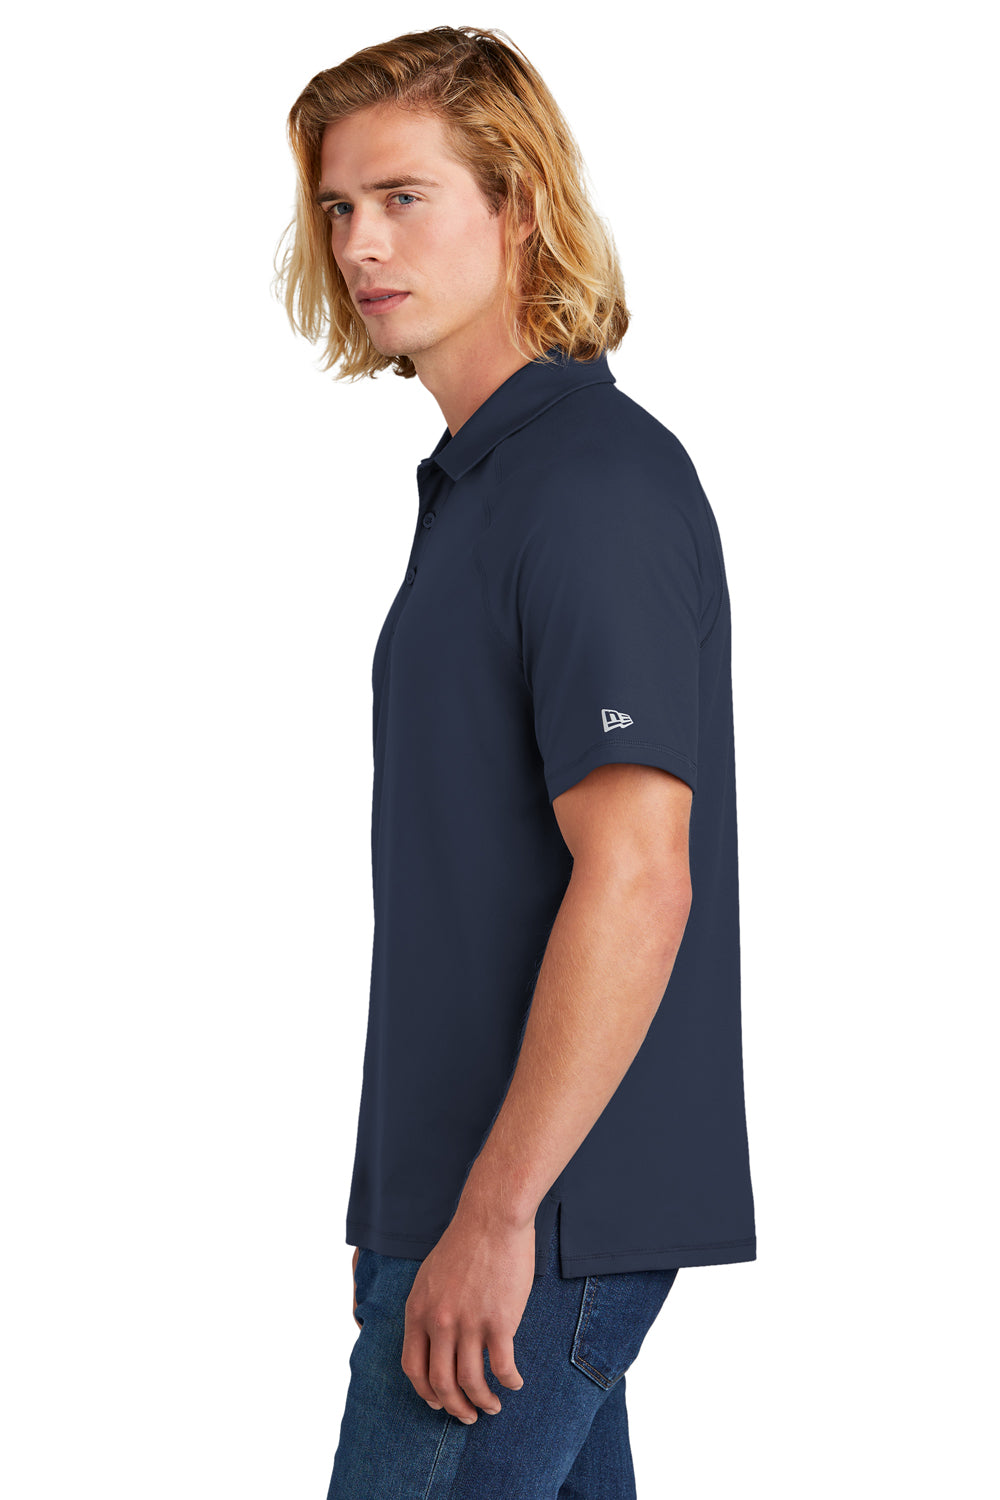 New Era Mens Power Short Sleeve Polo Shirt True Navy Blue Side